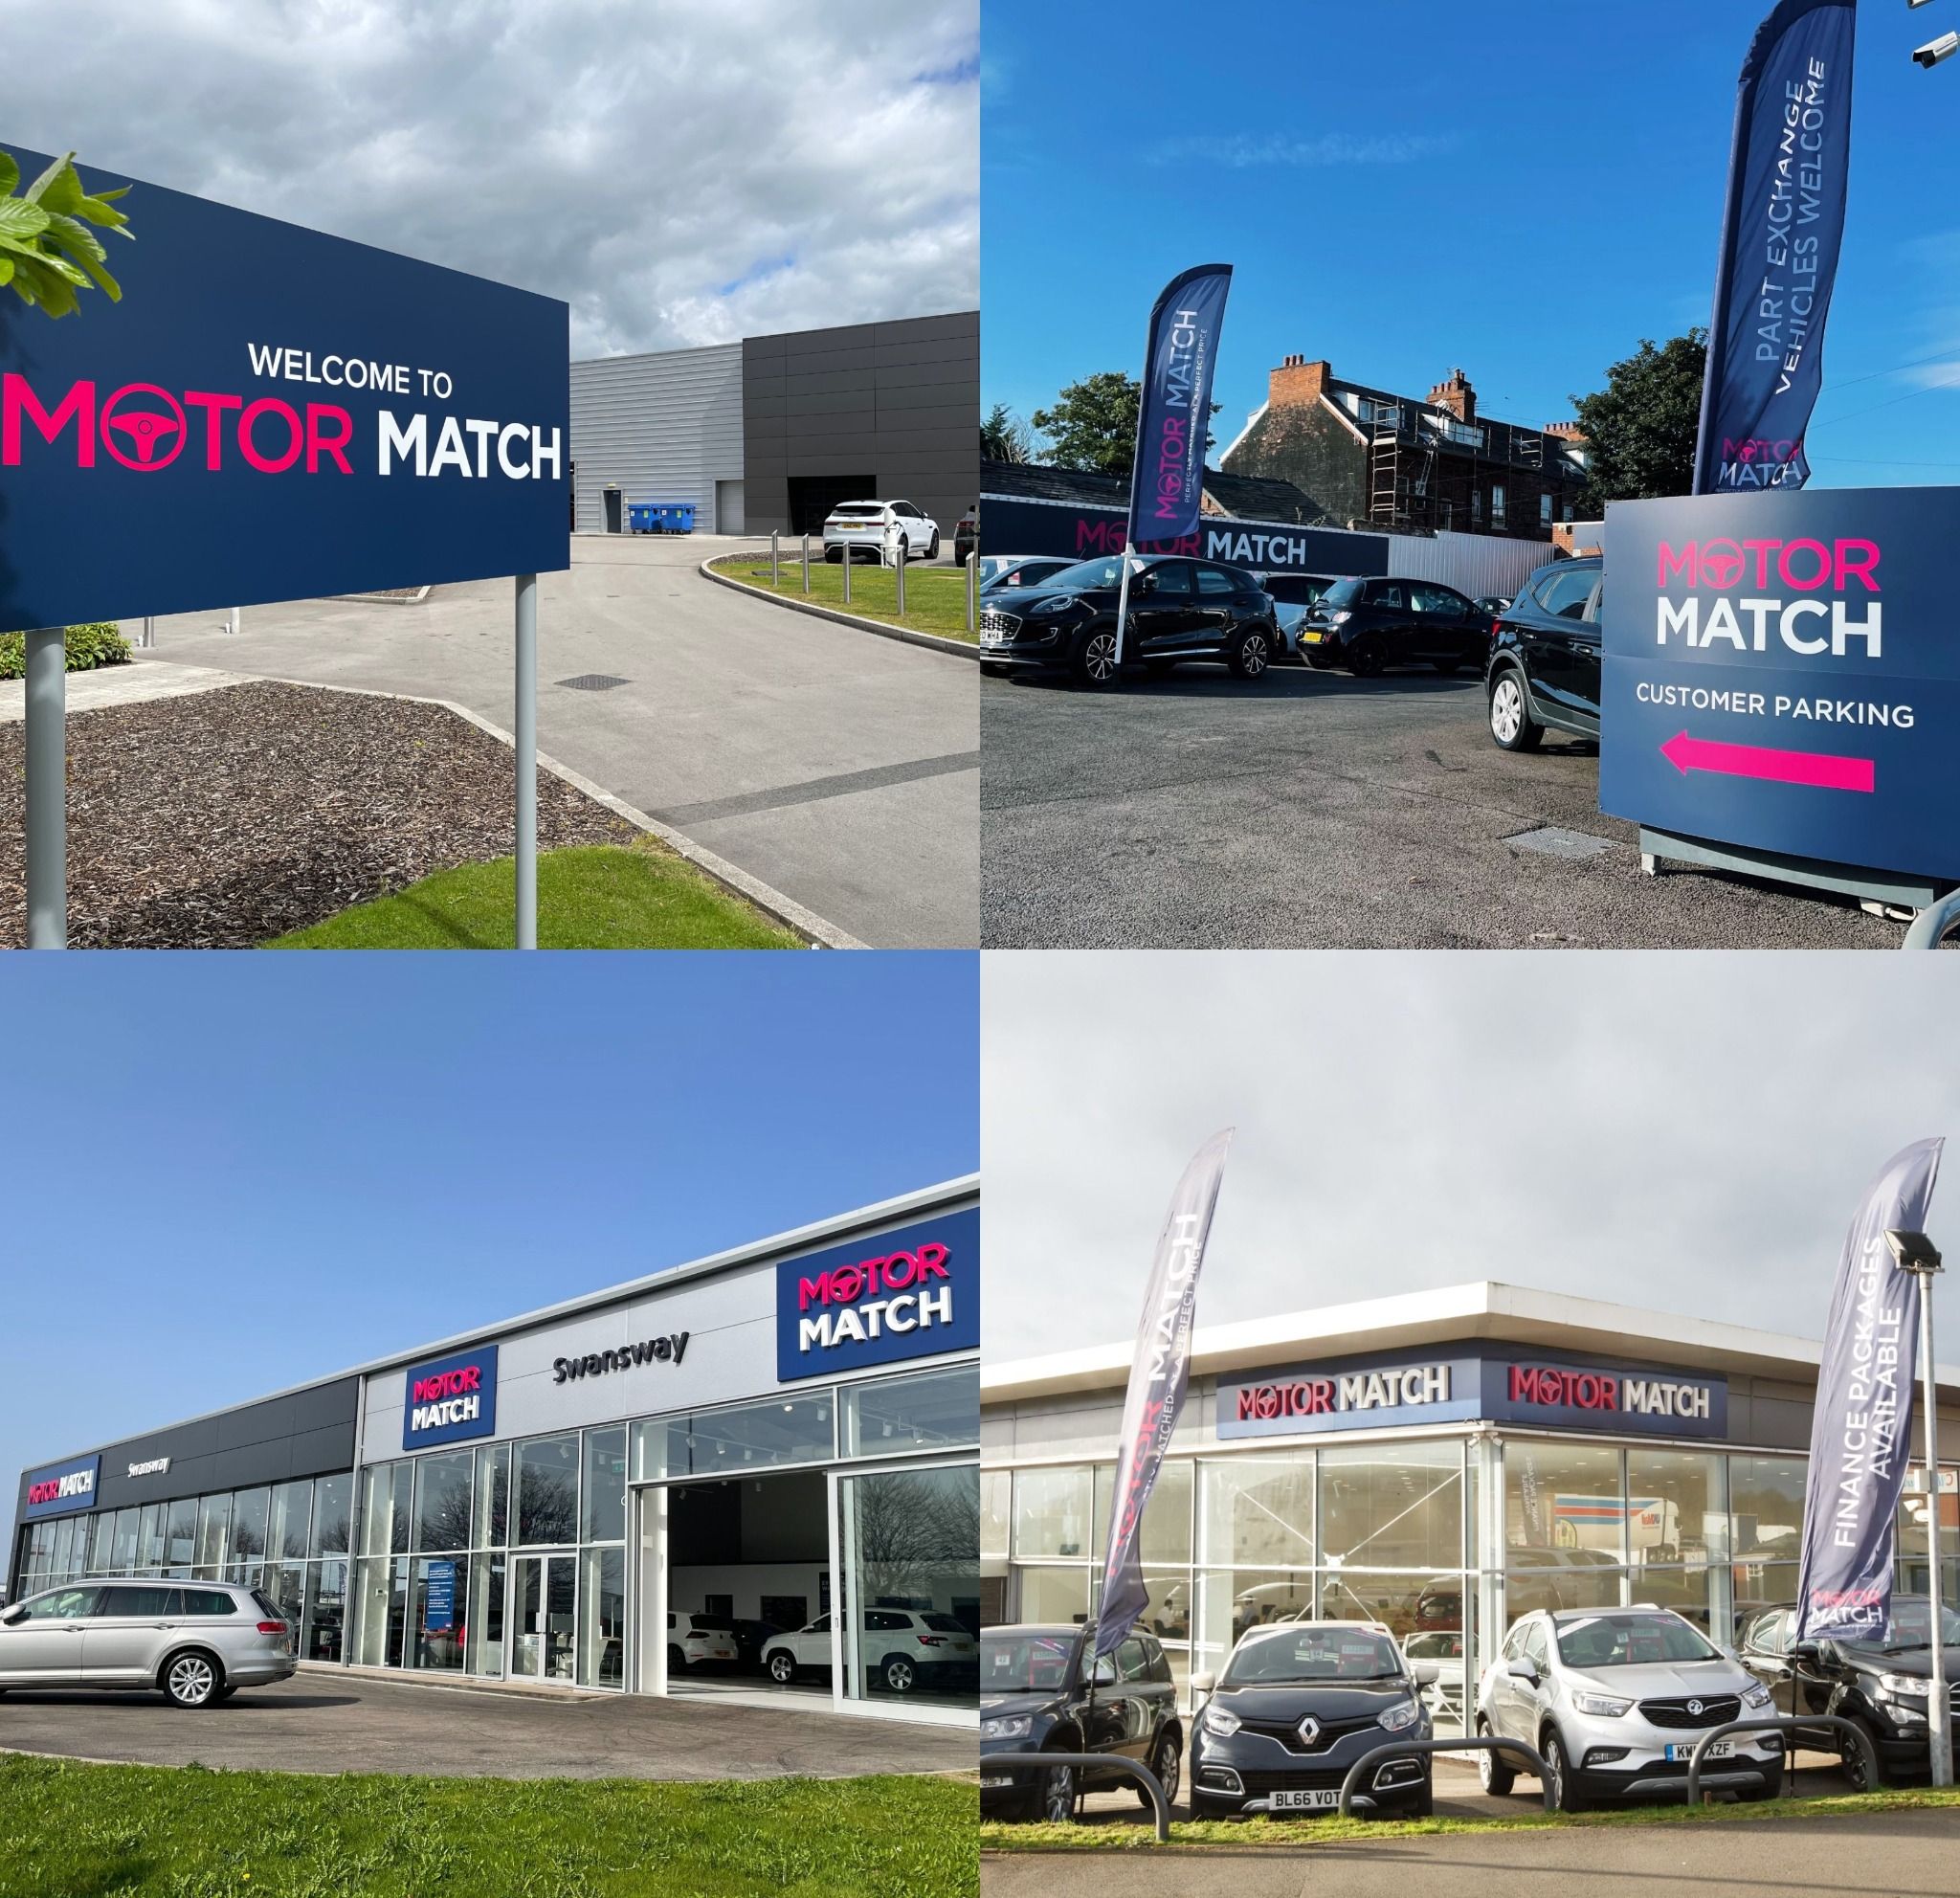 Motor Match dealership collage